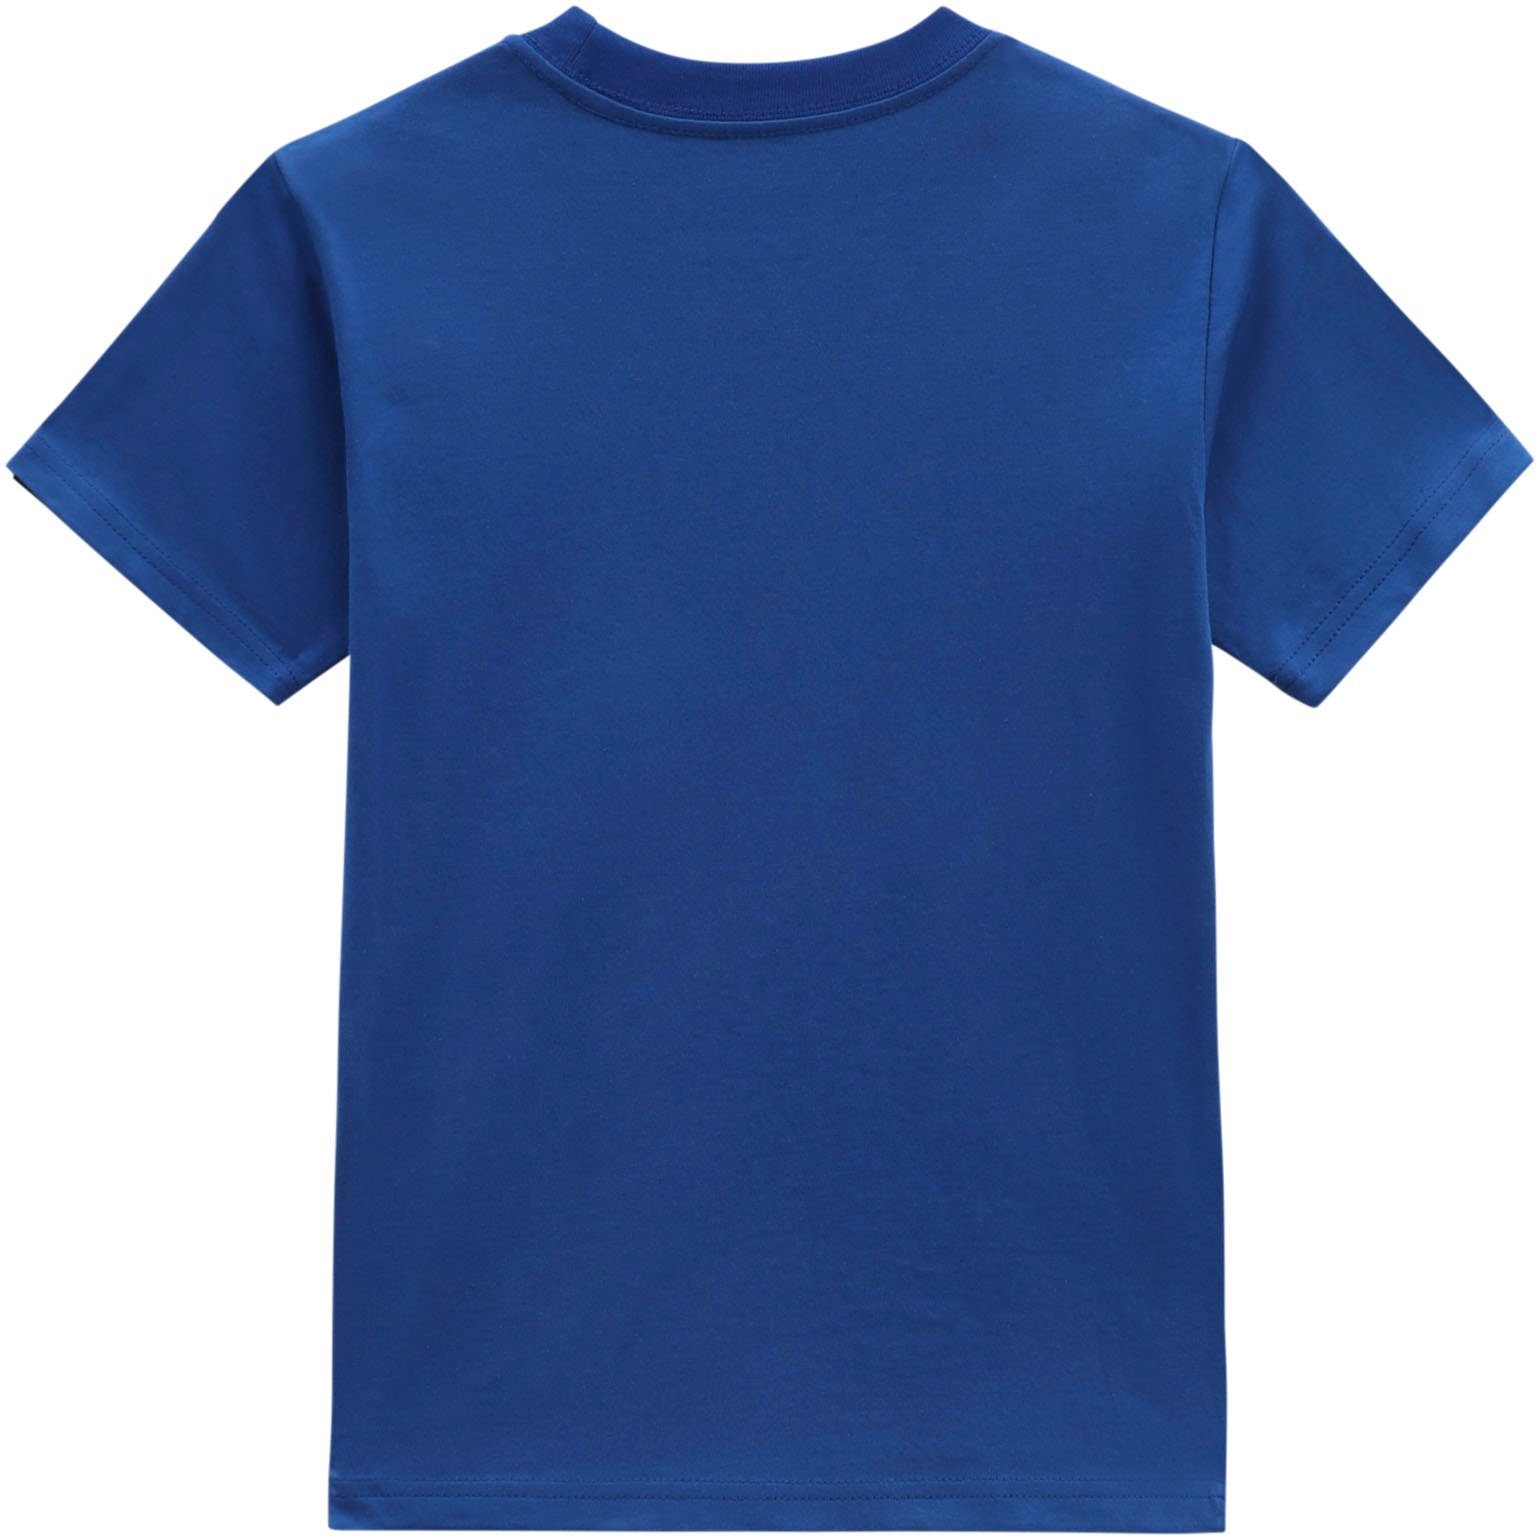 BY KIDS white Vans blue/ VANS T-Shirt CLASSIC